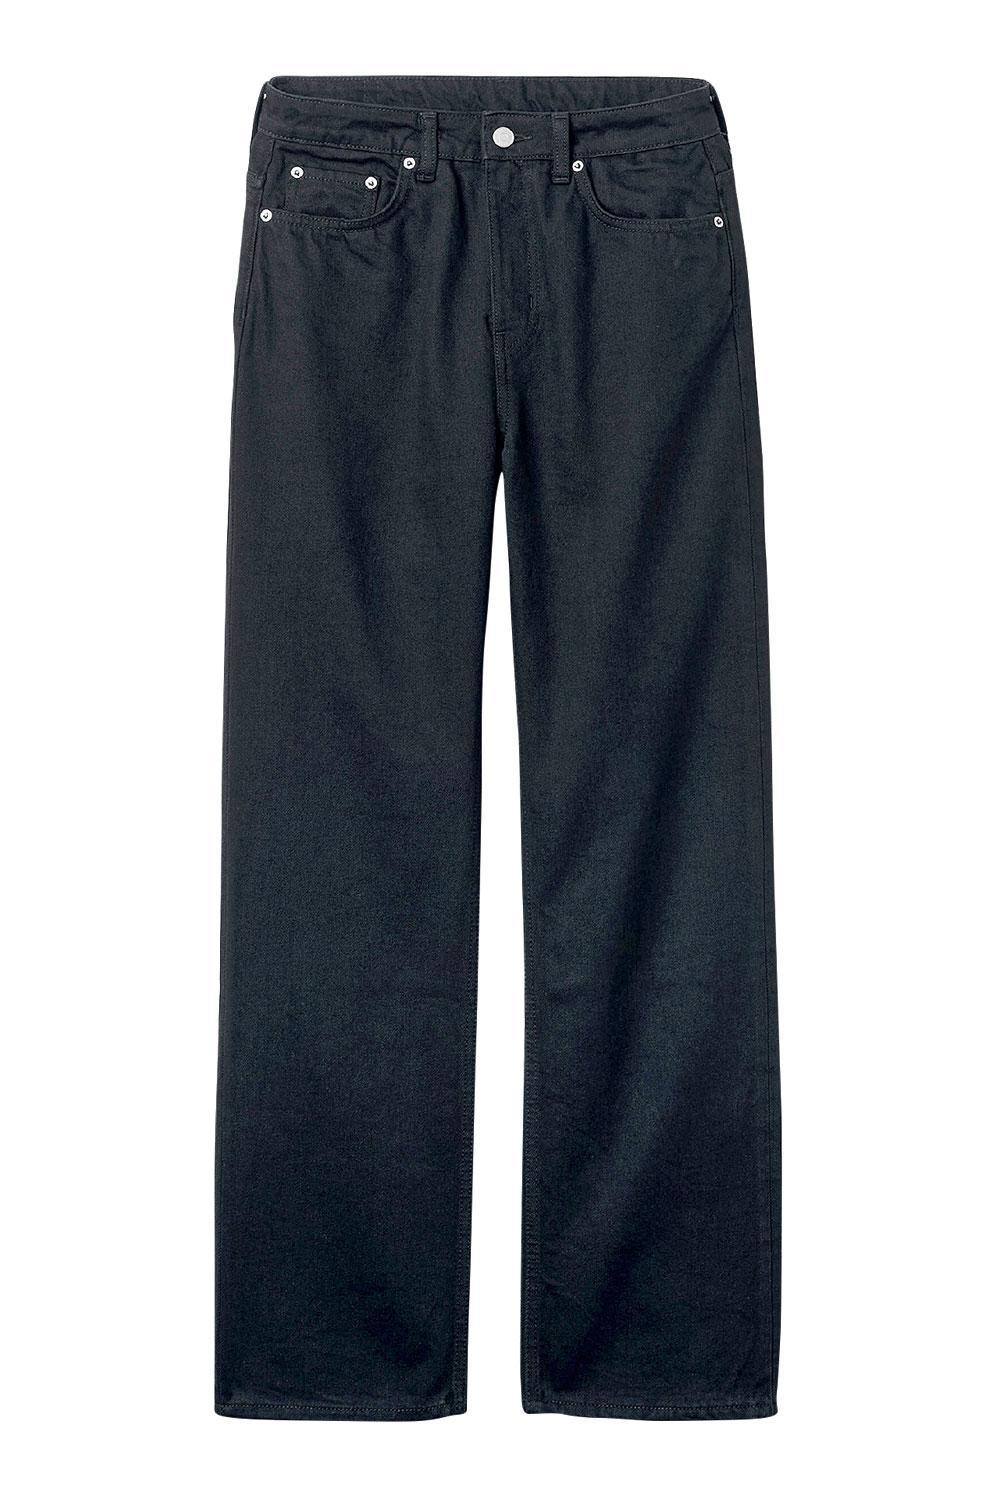 Pantalon en denim noir, Weekday, 50 euros